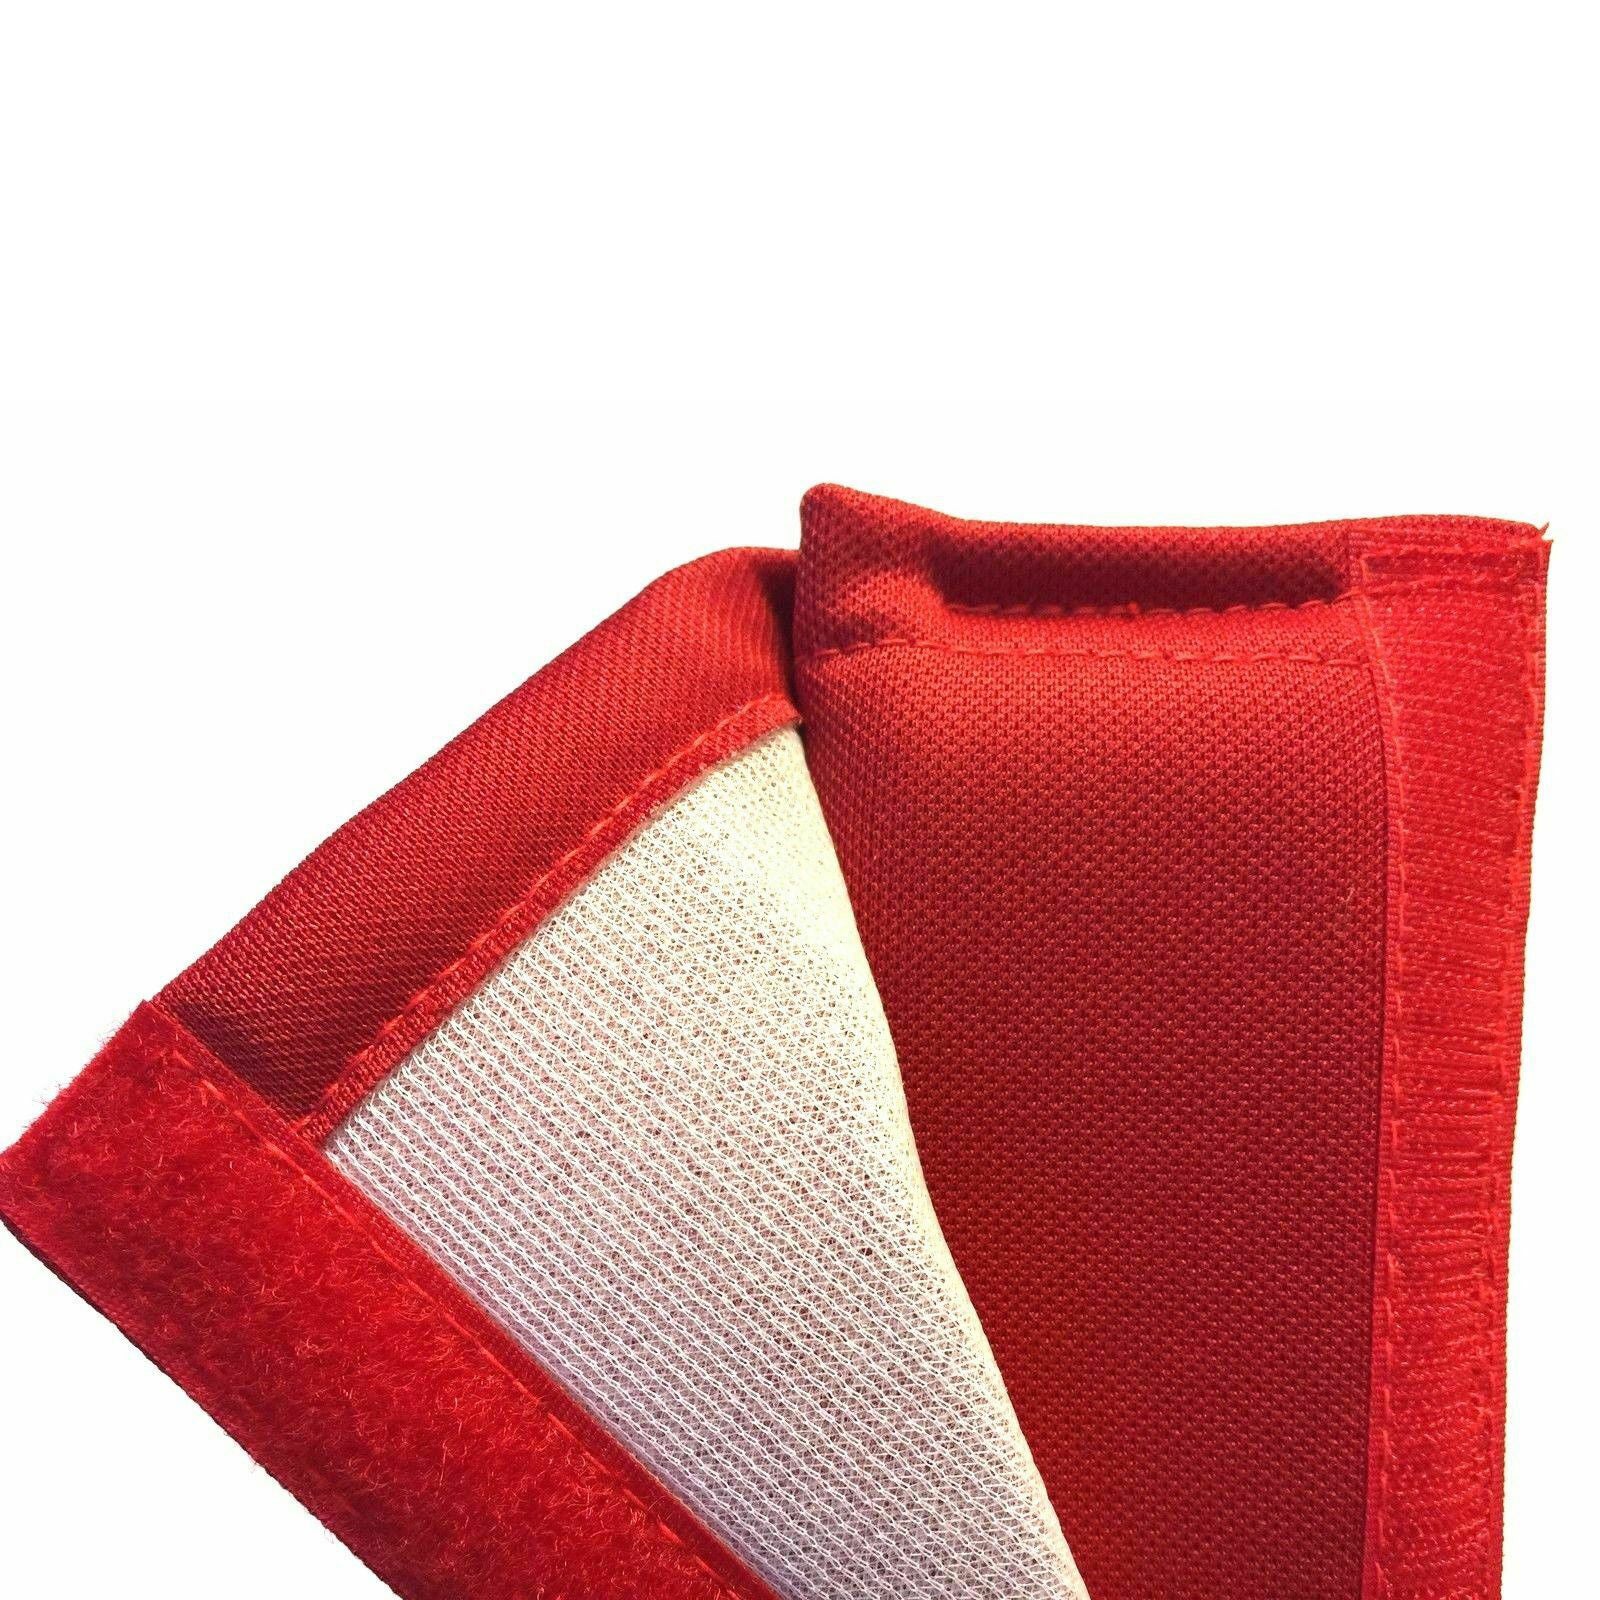 Honda ASIMO robot seat belt shoulder pads red fabric details.